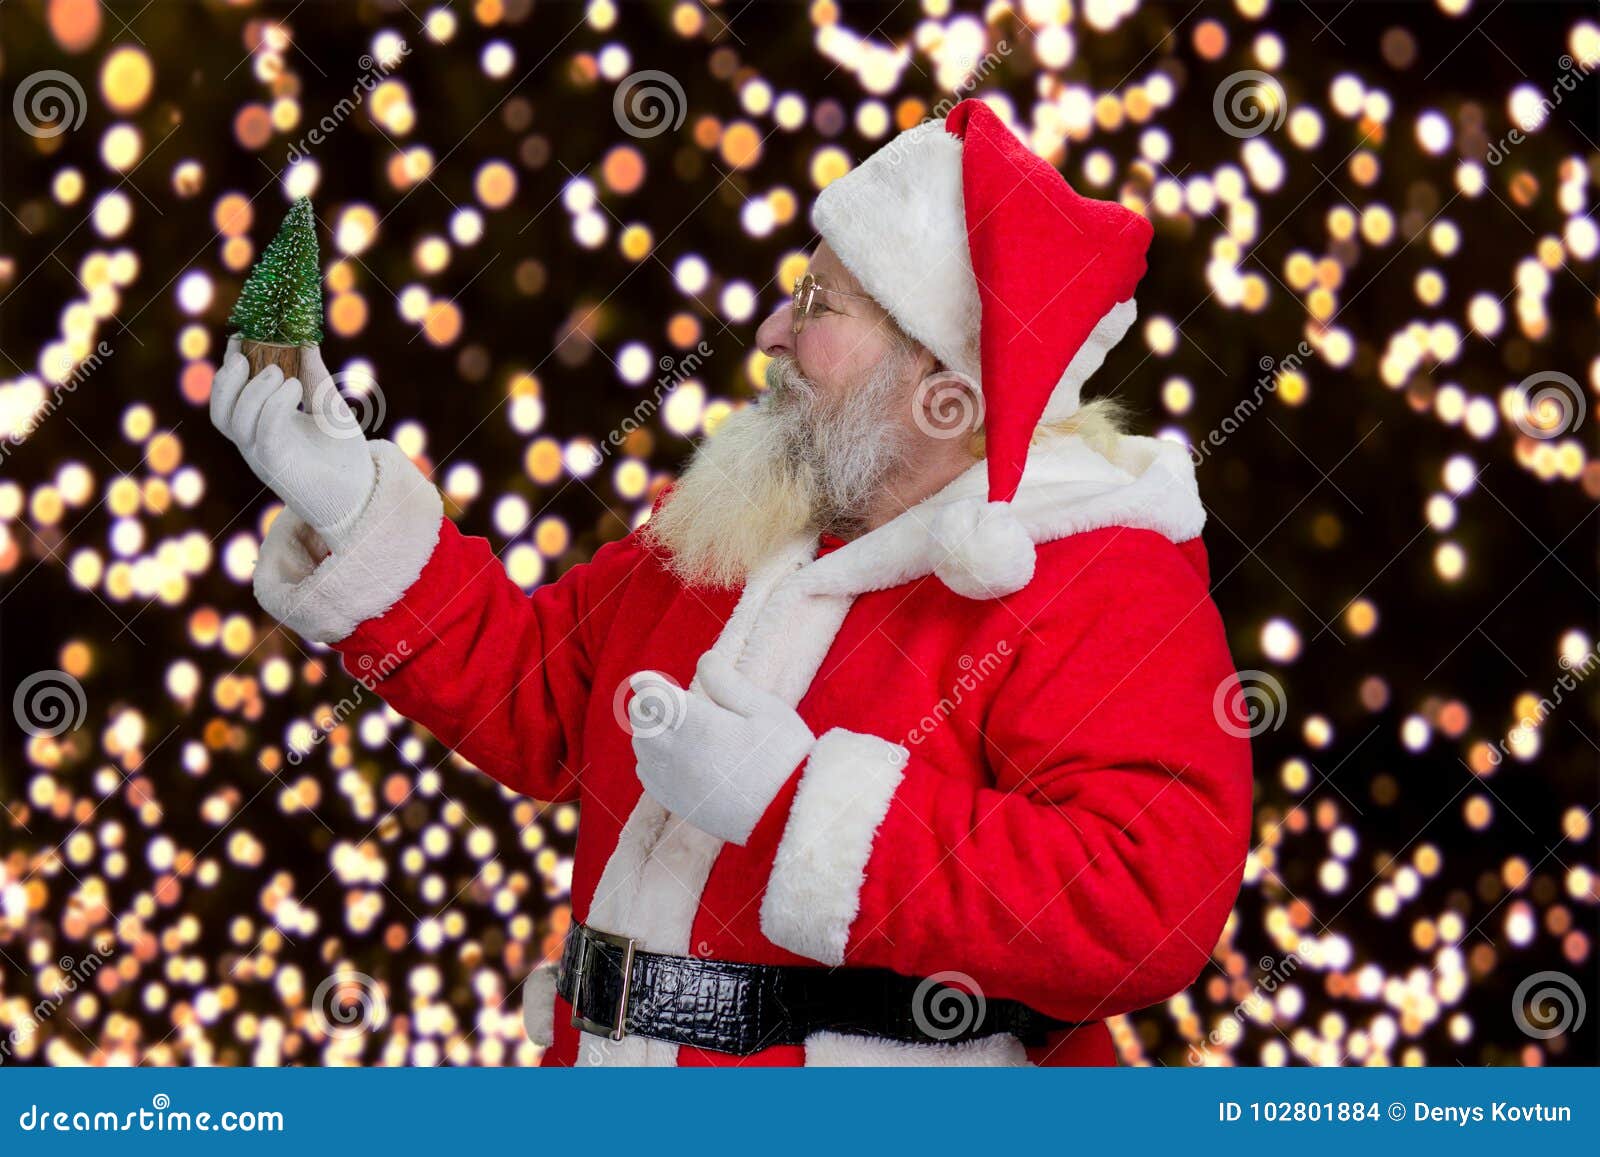 Christmas Ornament Santa Claus Holding Small Tree